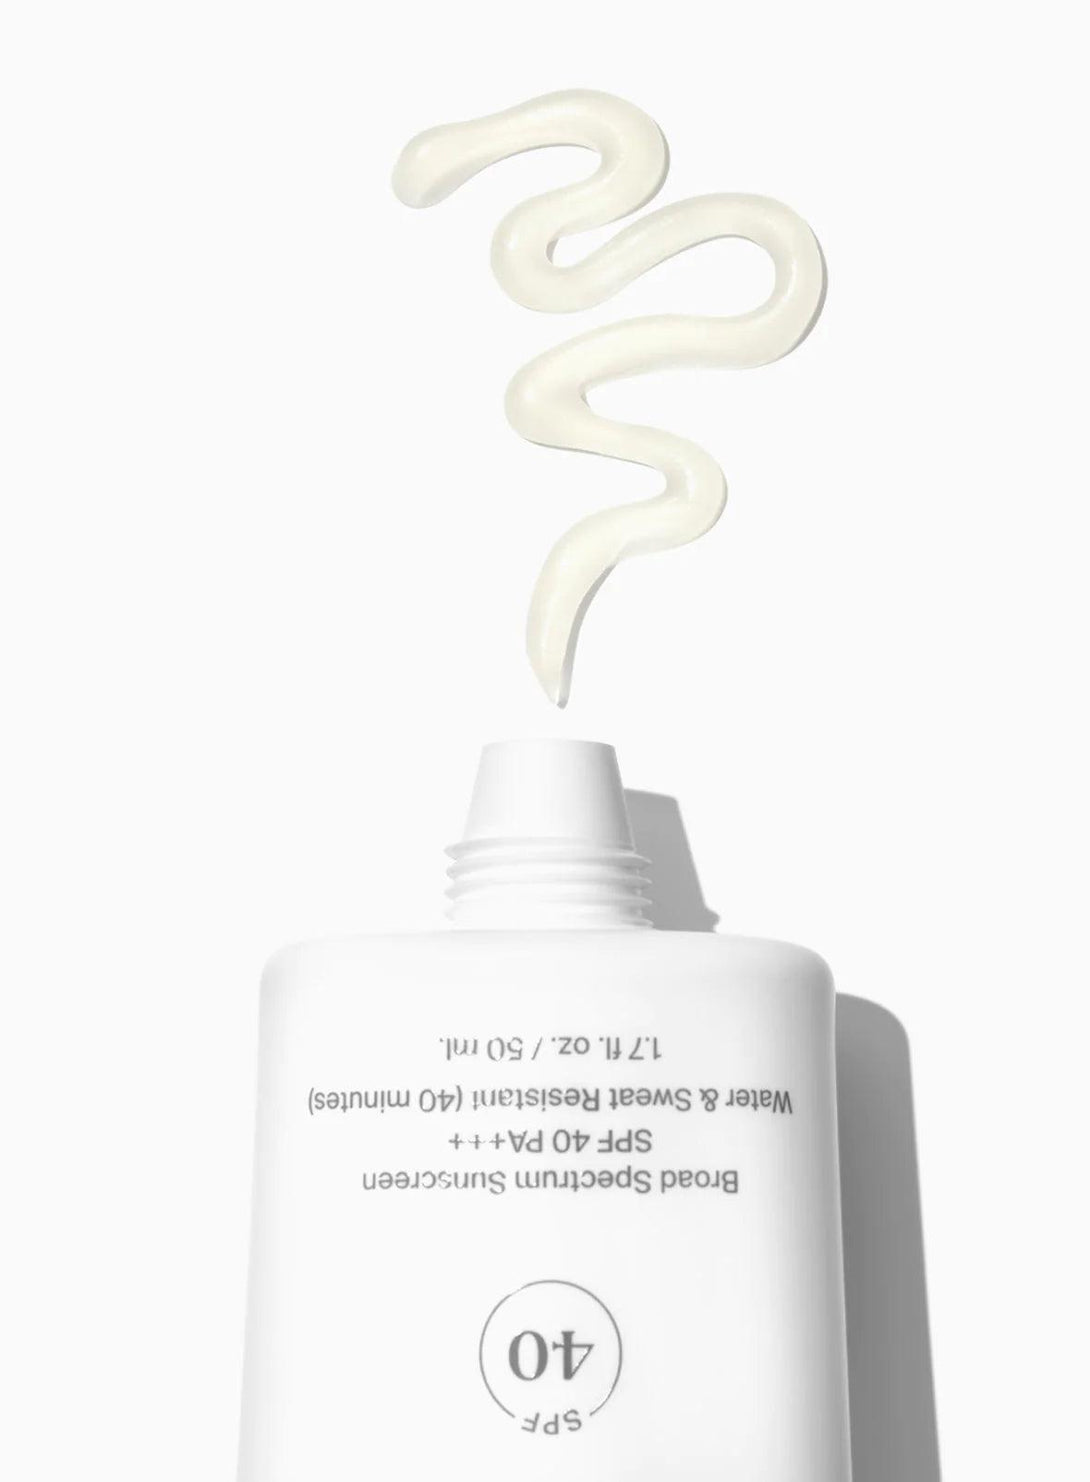 Supergoop - Unseen Sunscreen SPF 40 - 50ml - Cosmetic Holic